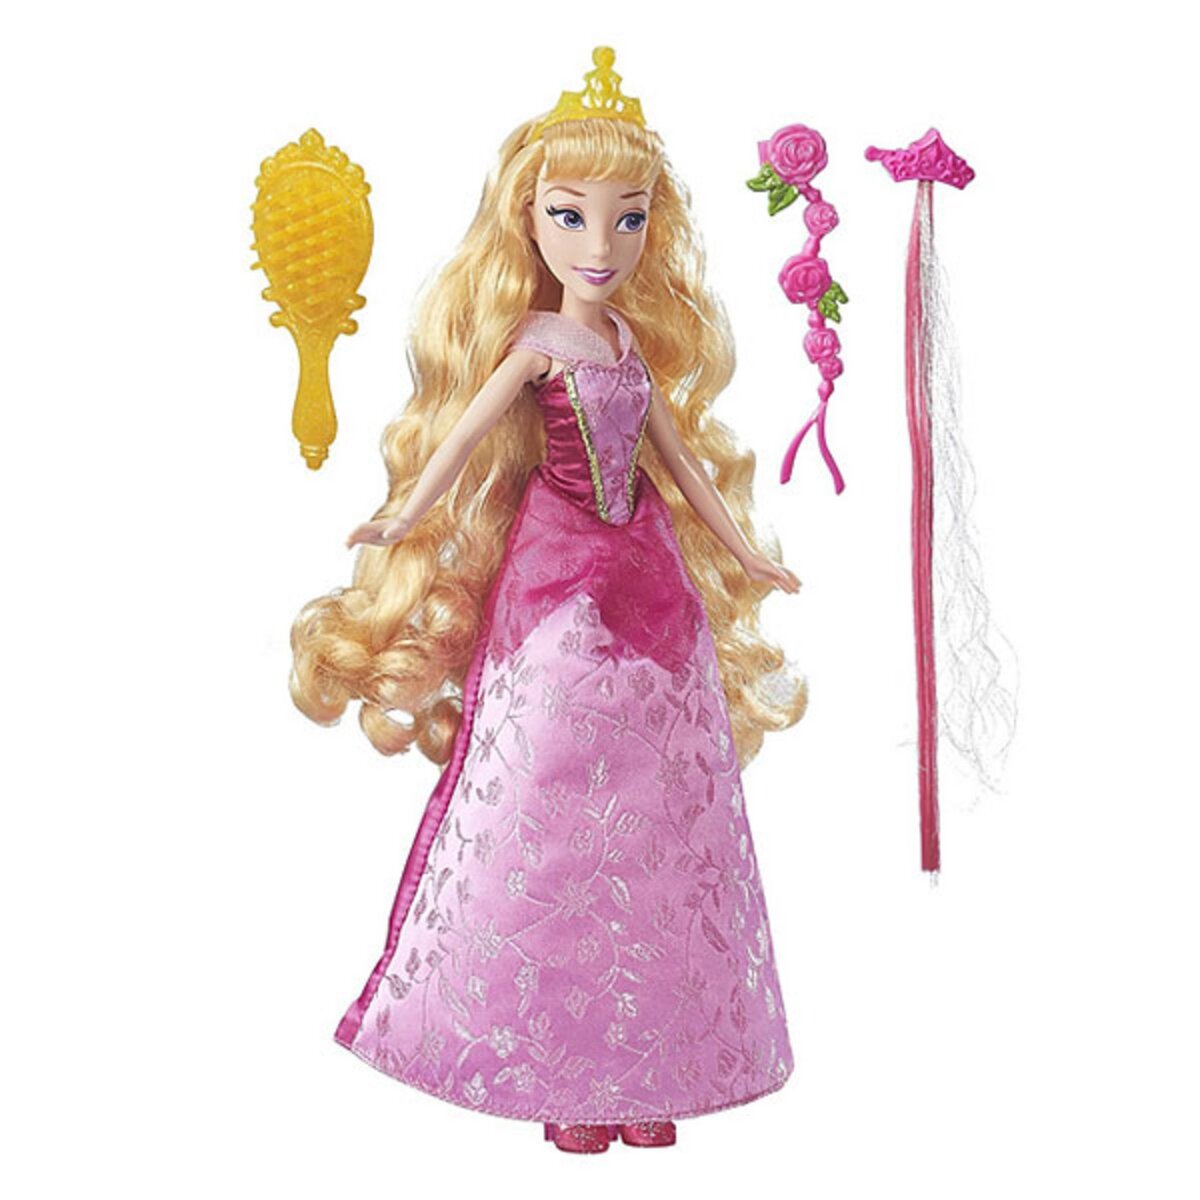 HASBRO Poupée Aurore chevelure de rêve - Disney Princesses